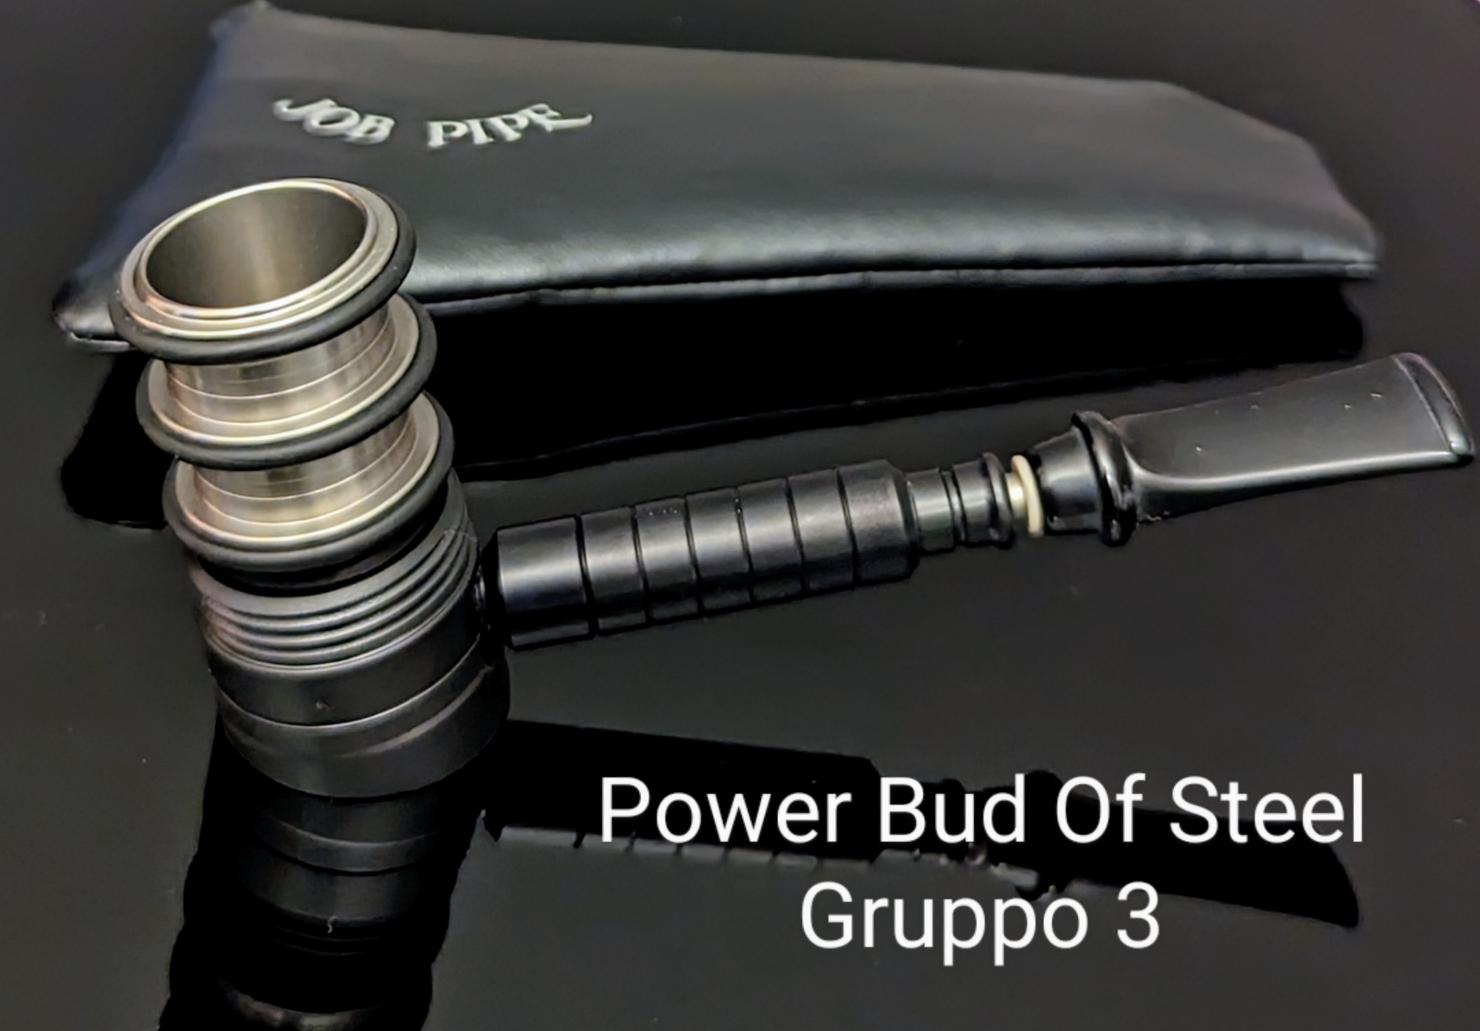 Power Bud Of Steel Filtro 9 mm